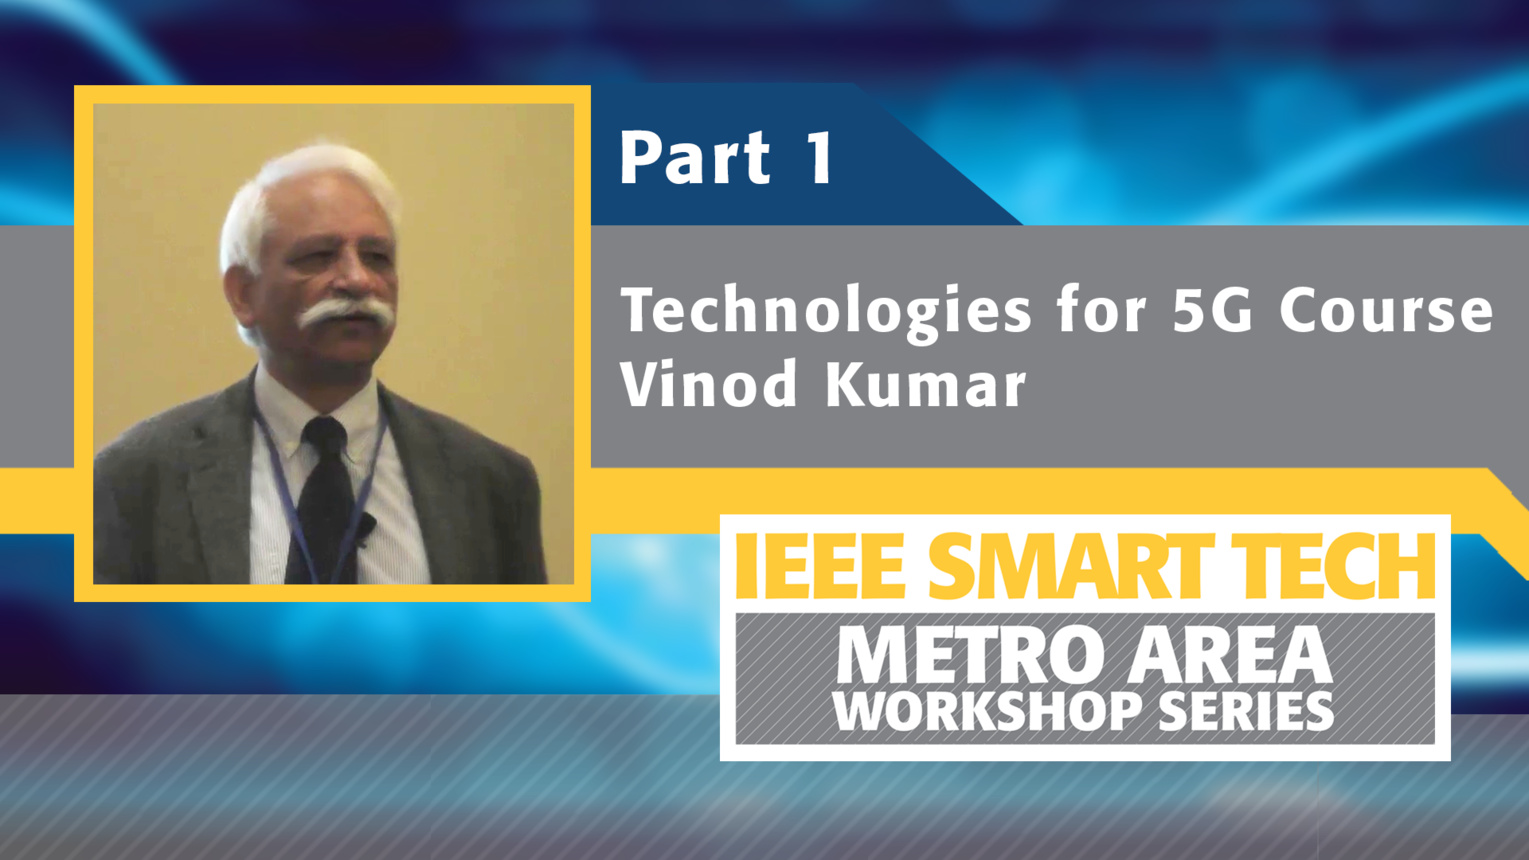 Technologies for 5G course, Part 1 - IEEE Smart Tech Workshop